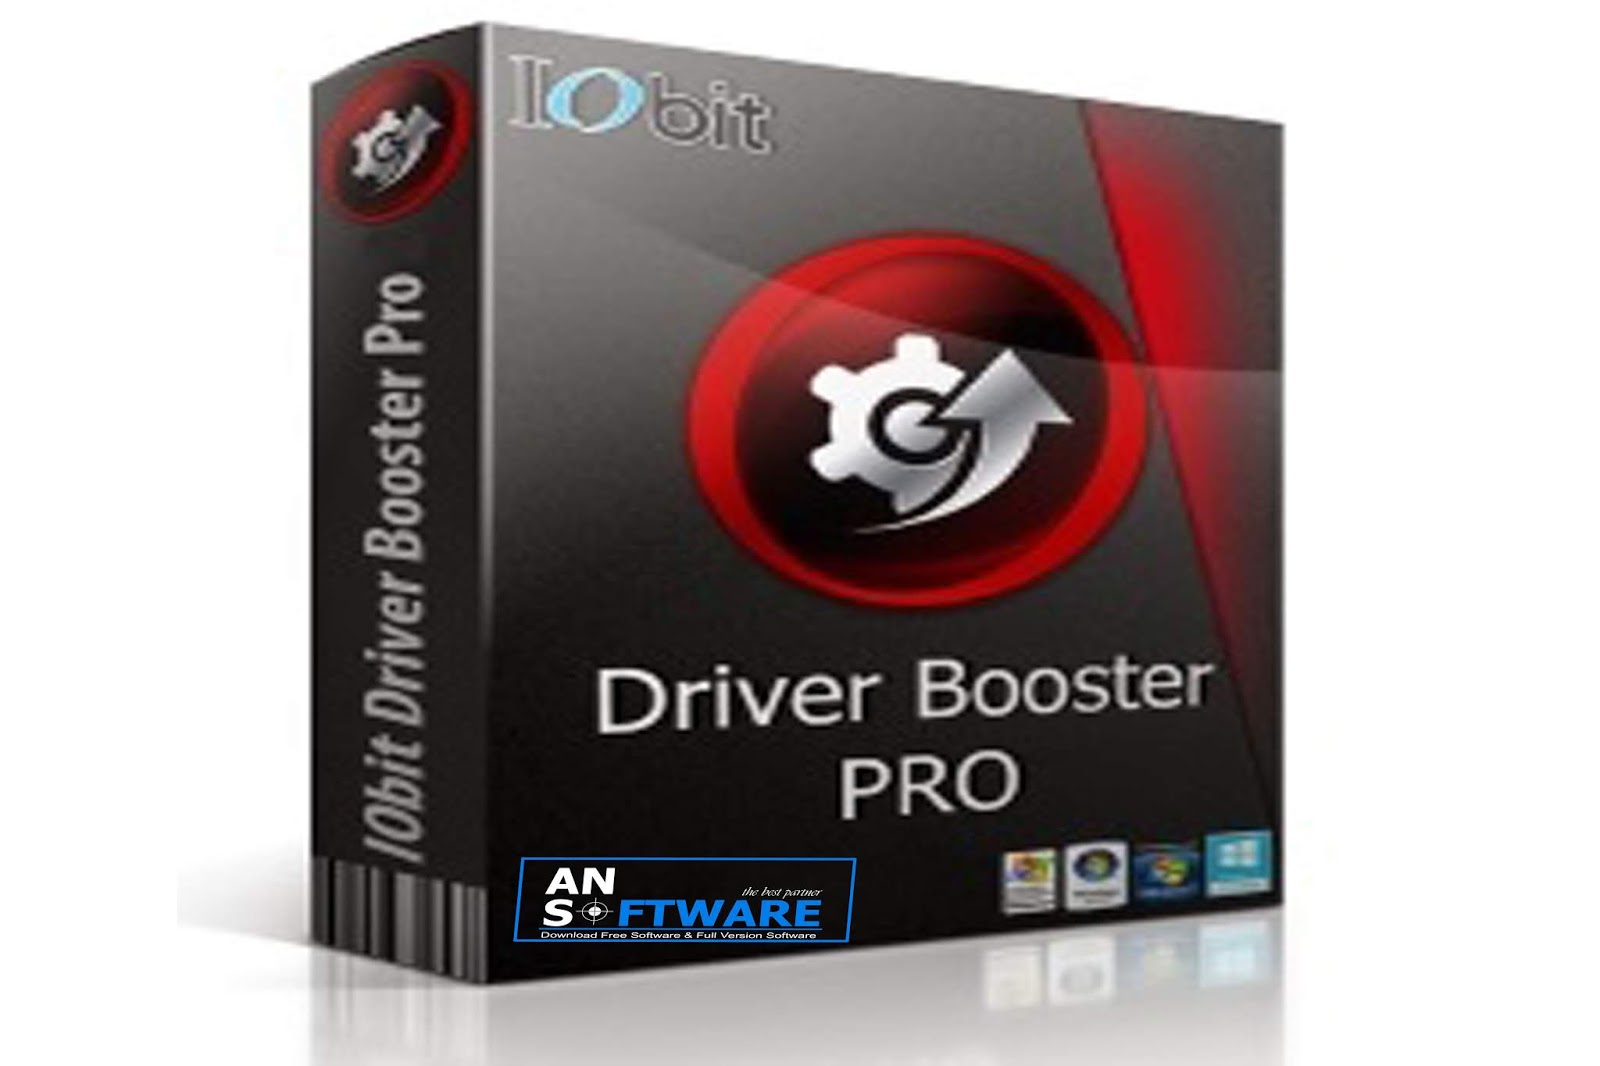 Booster pro c бесплатным. Driver Booster Pro. Driver Booster Pro крякнутый. ПК бустера. Driver Booster upgrade to Pro.